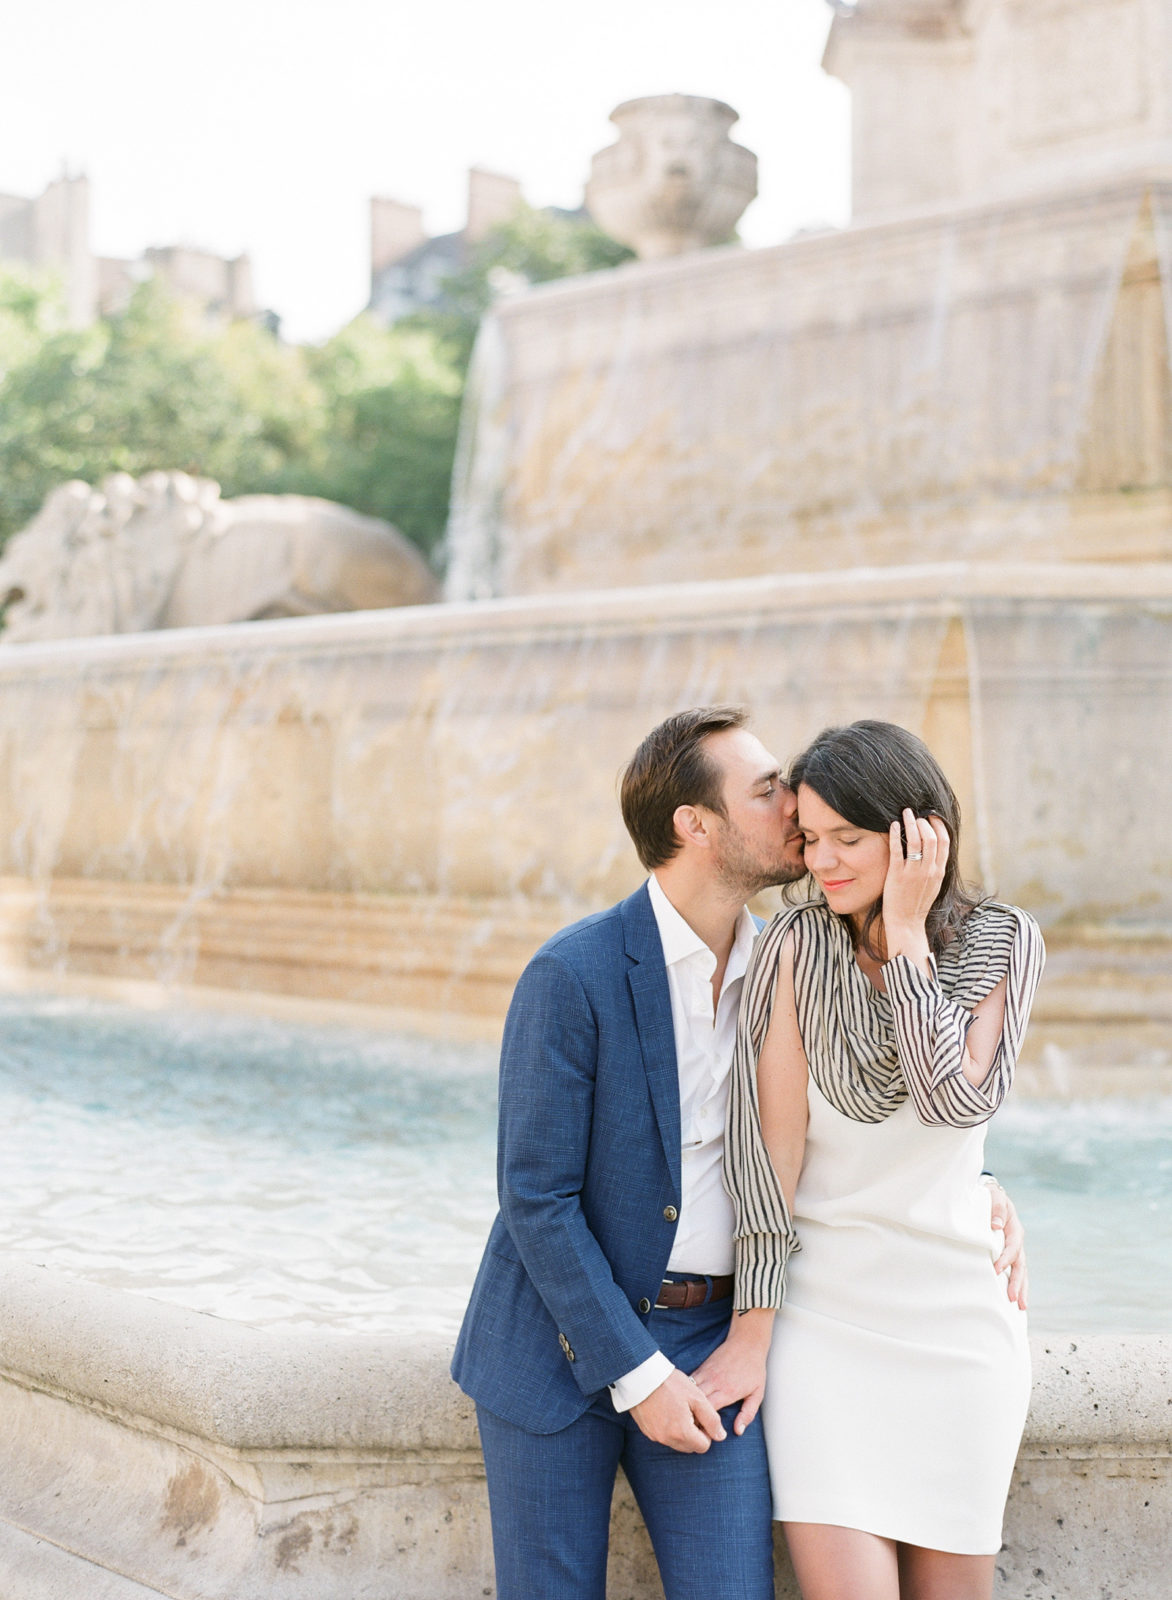 Best Engagement Photos of 2018 | Fine Art Film Photography | Destination Wedding Photographer | Molly Carr Photography | Engagement Session | Pre-Wedding Photos | Paris Engagement Photos | France